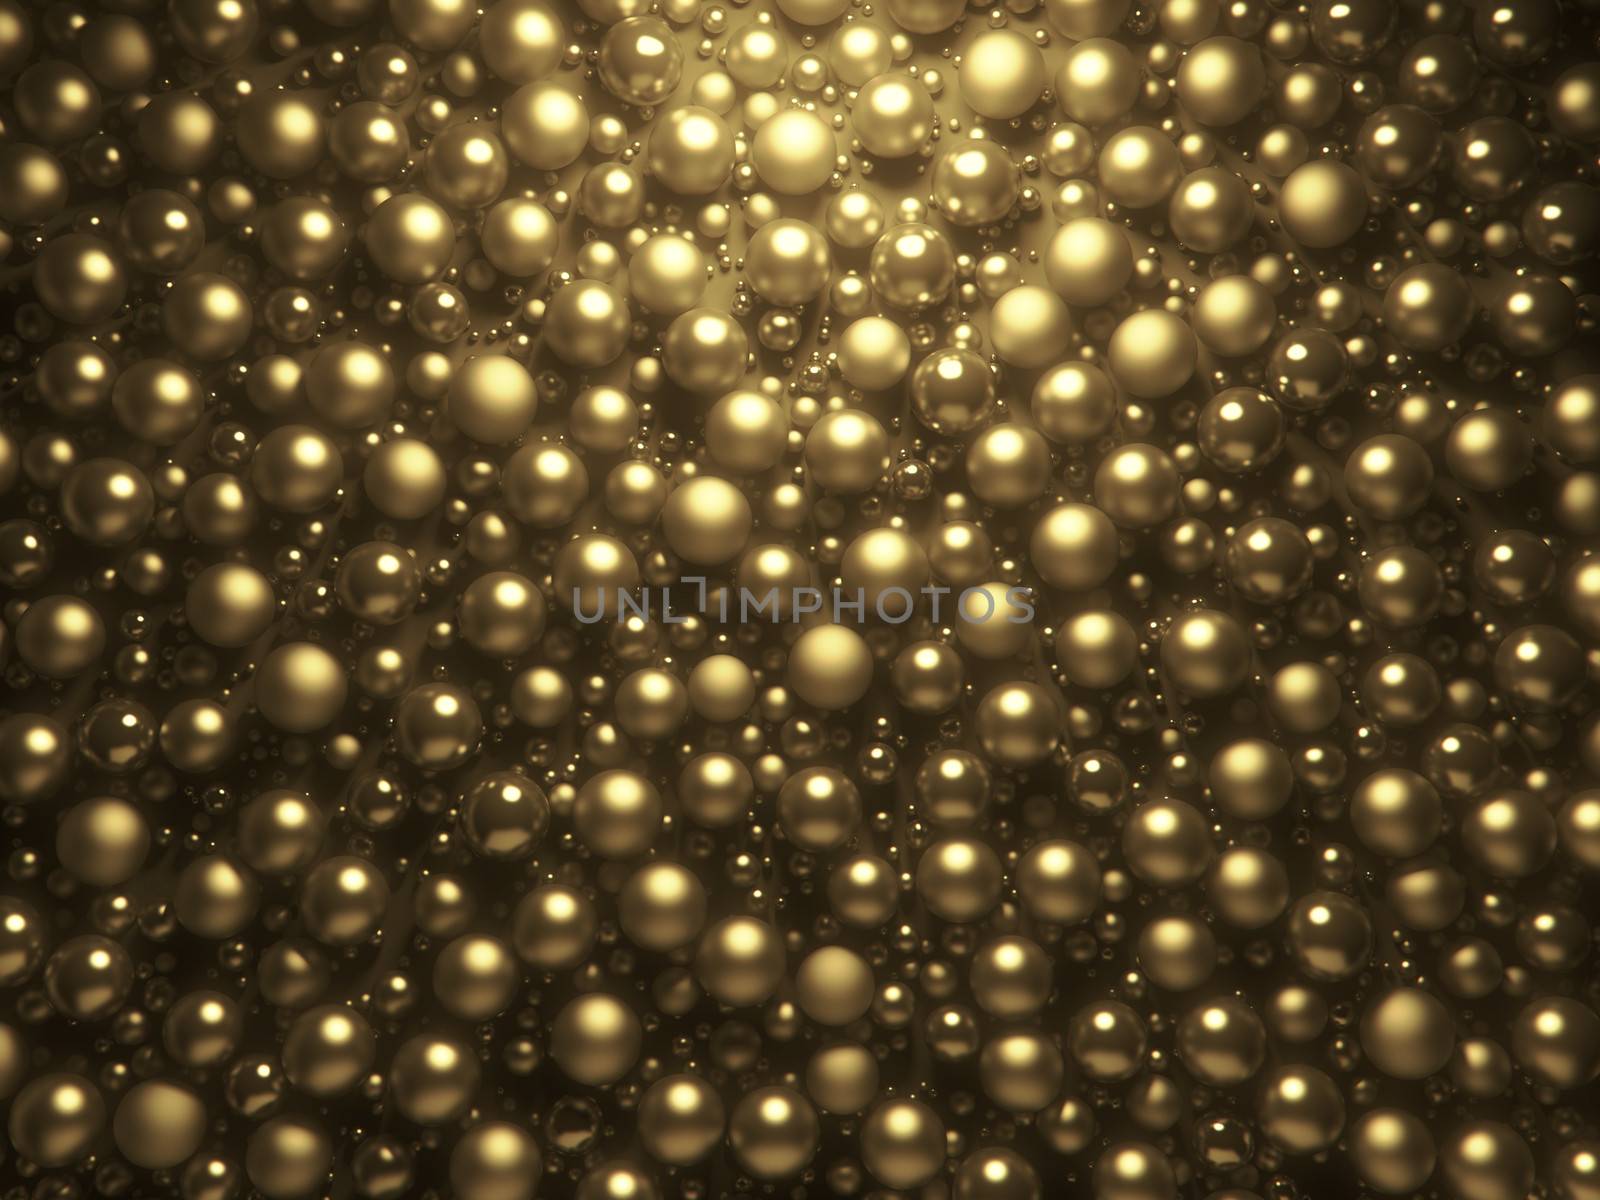 3D golden pearls background by 123dartist